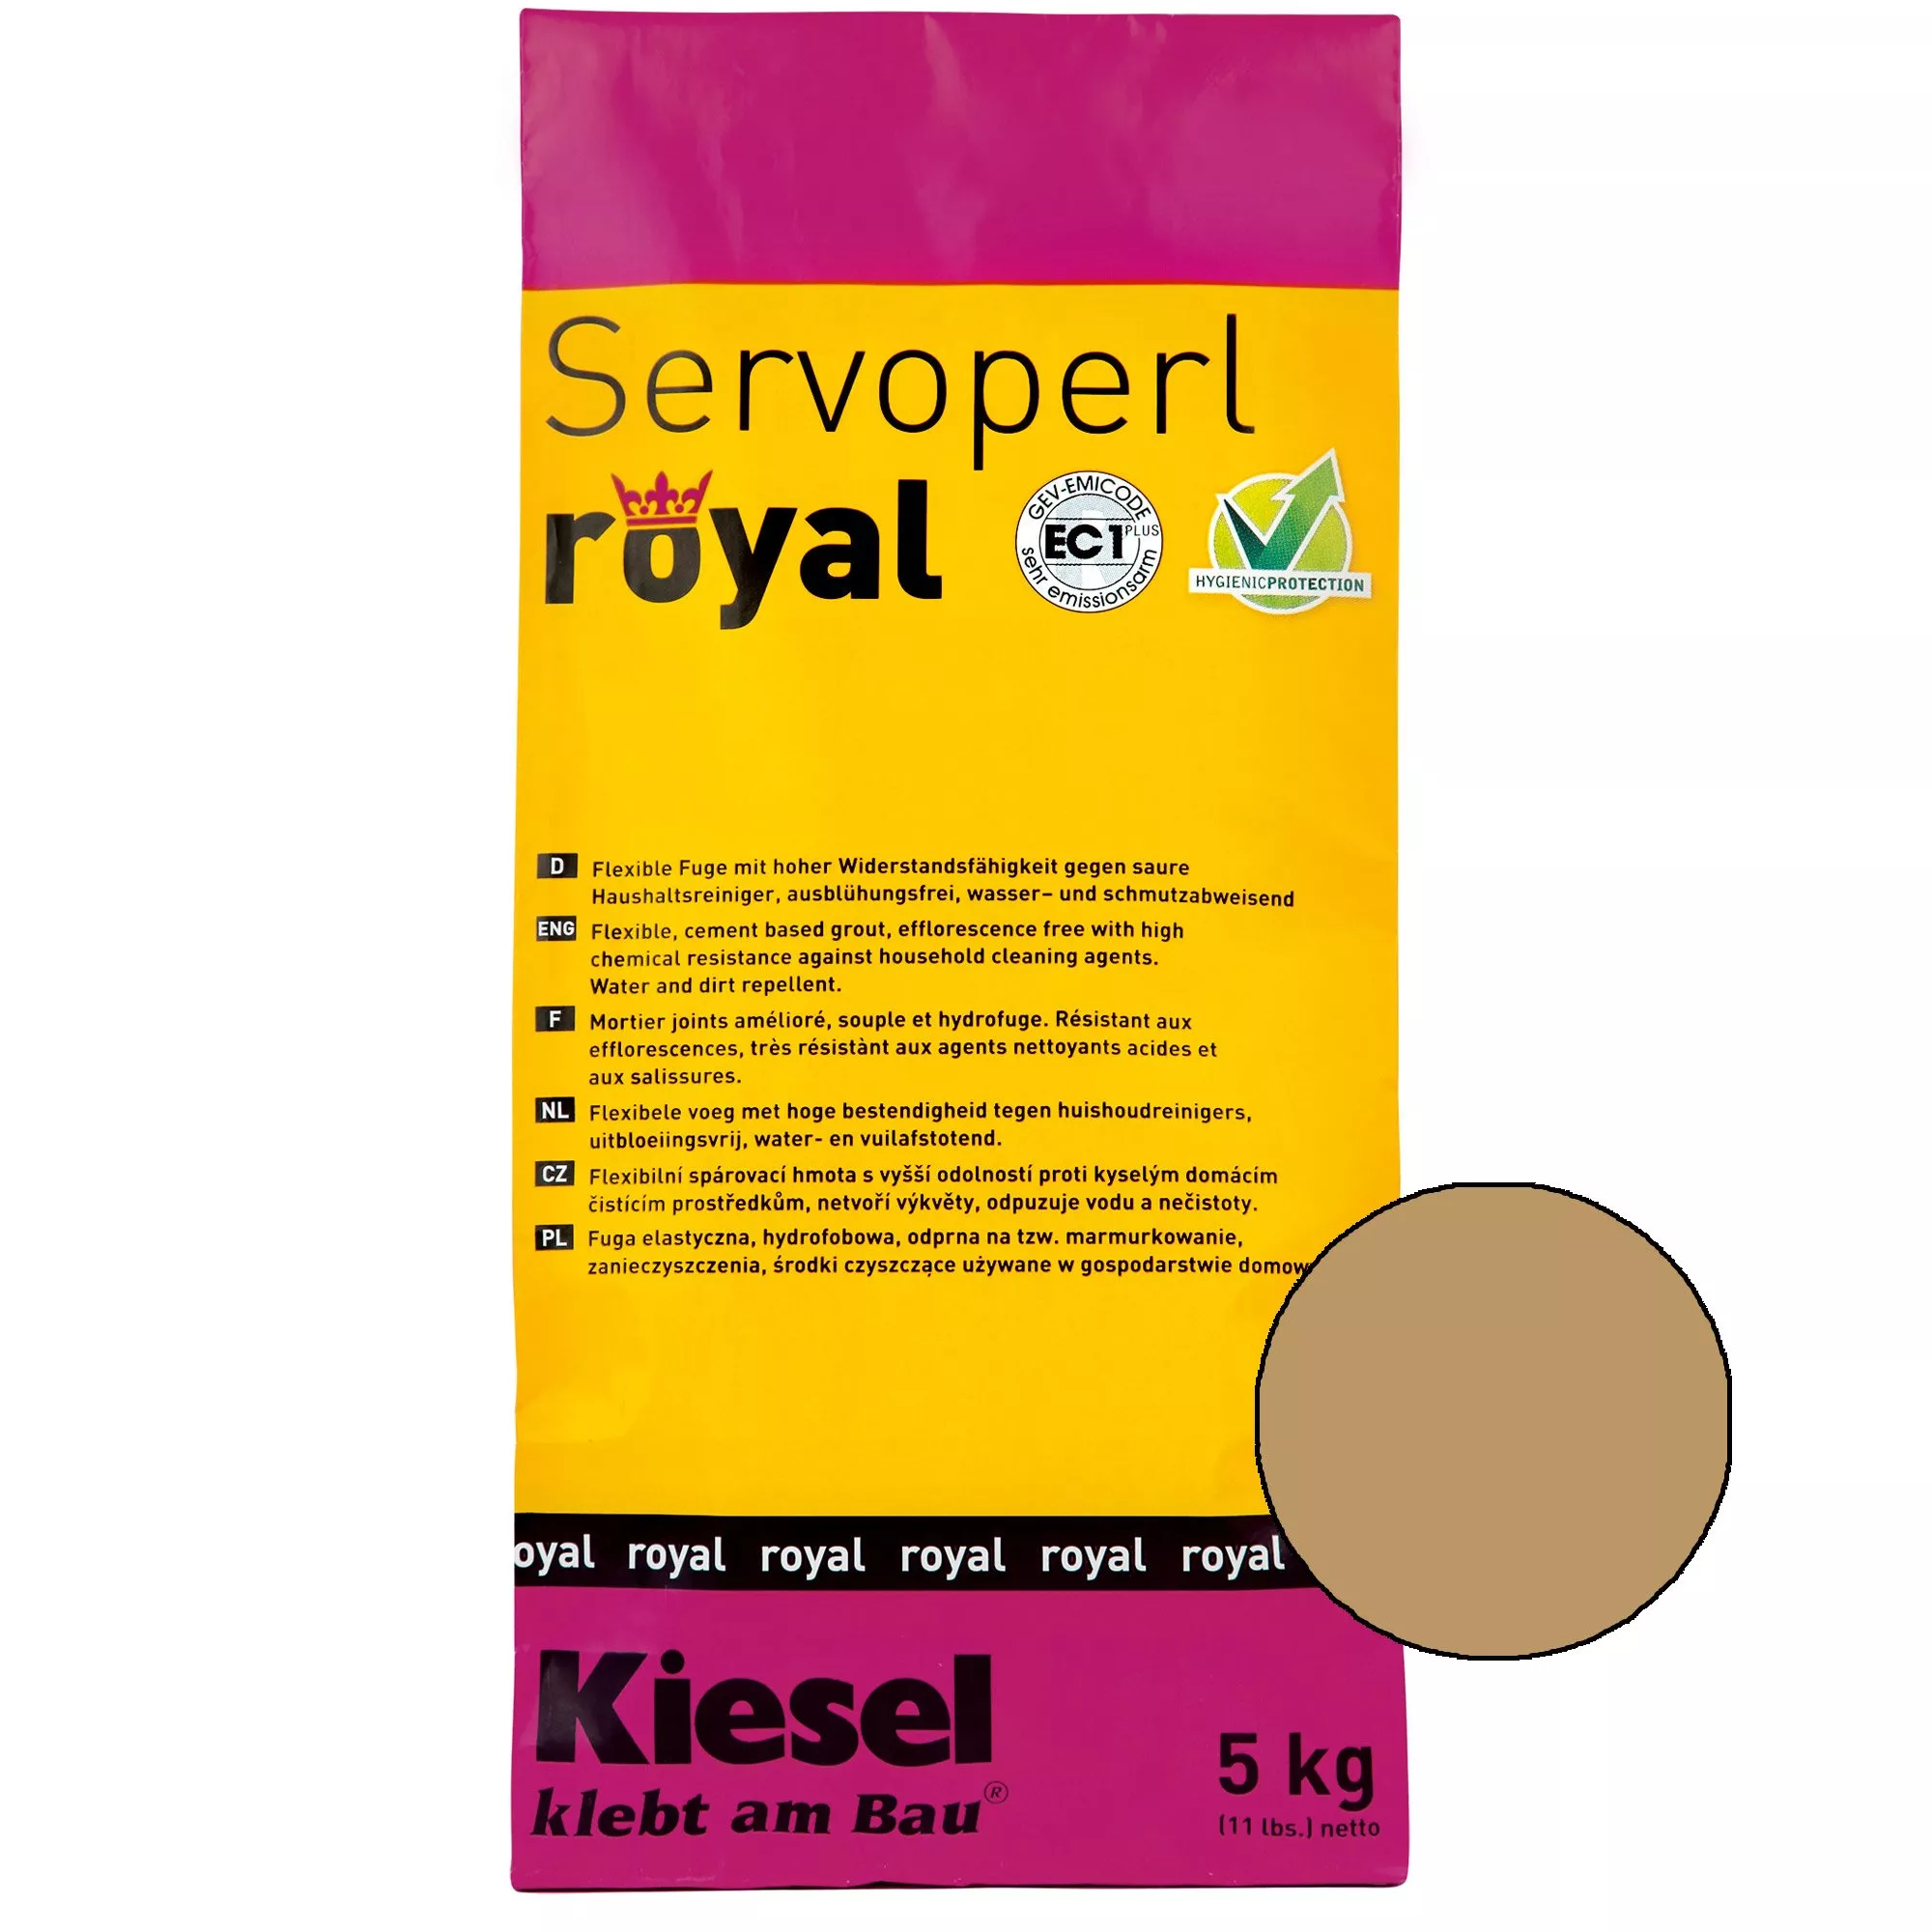 Kiesel Servoperl royal - compus pentru rosturi - 5 kg maro deschis